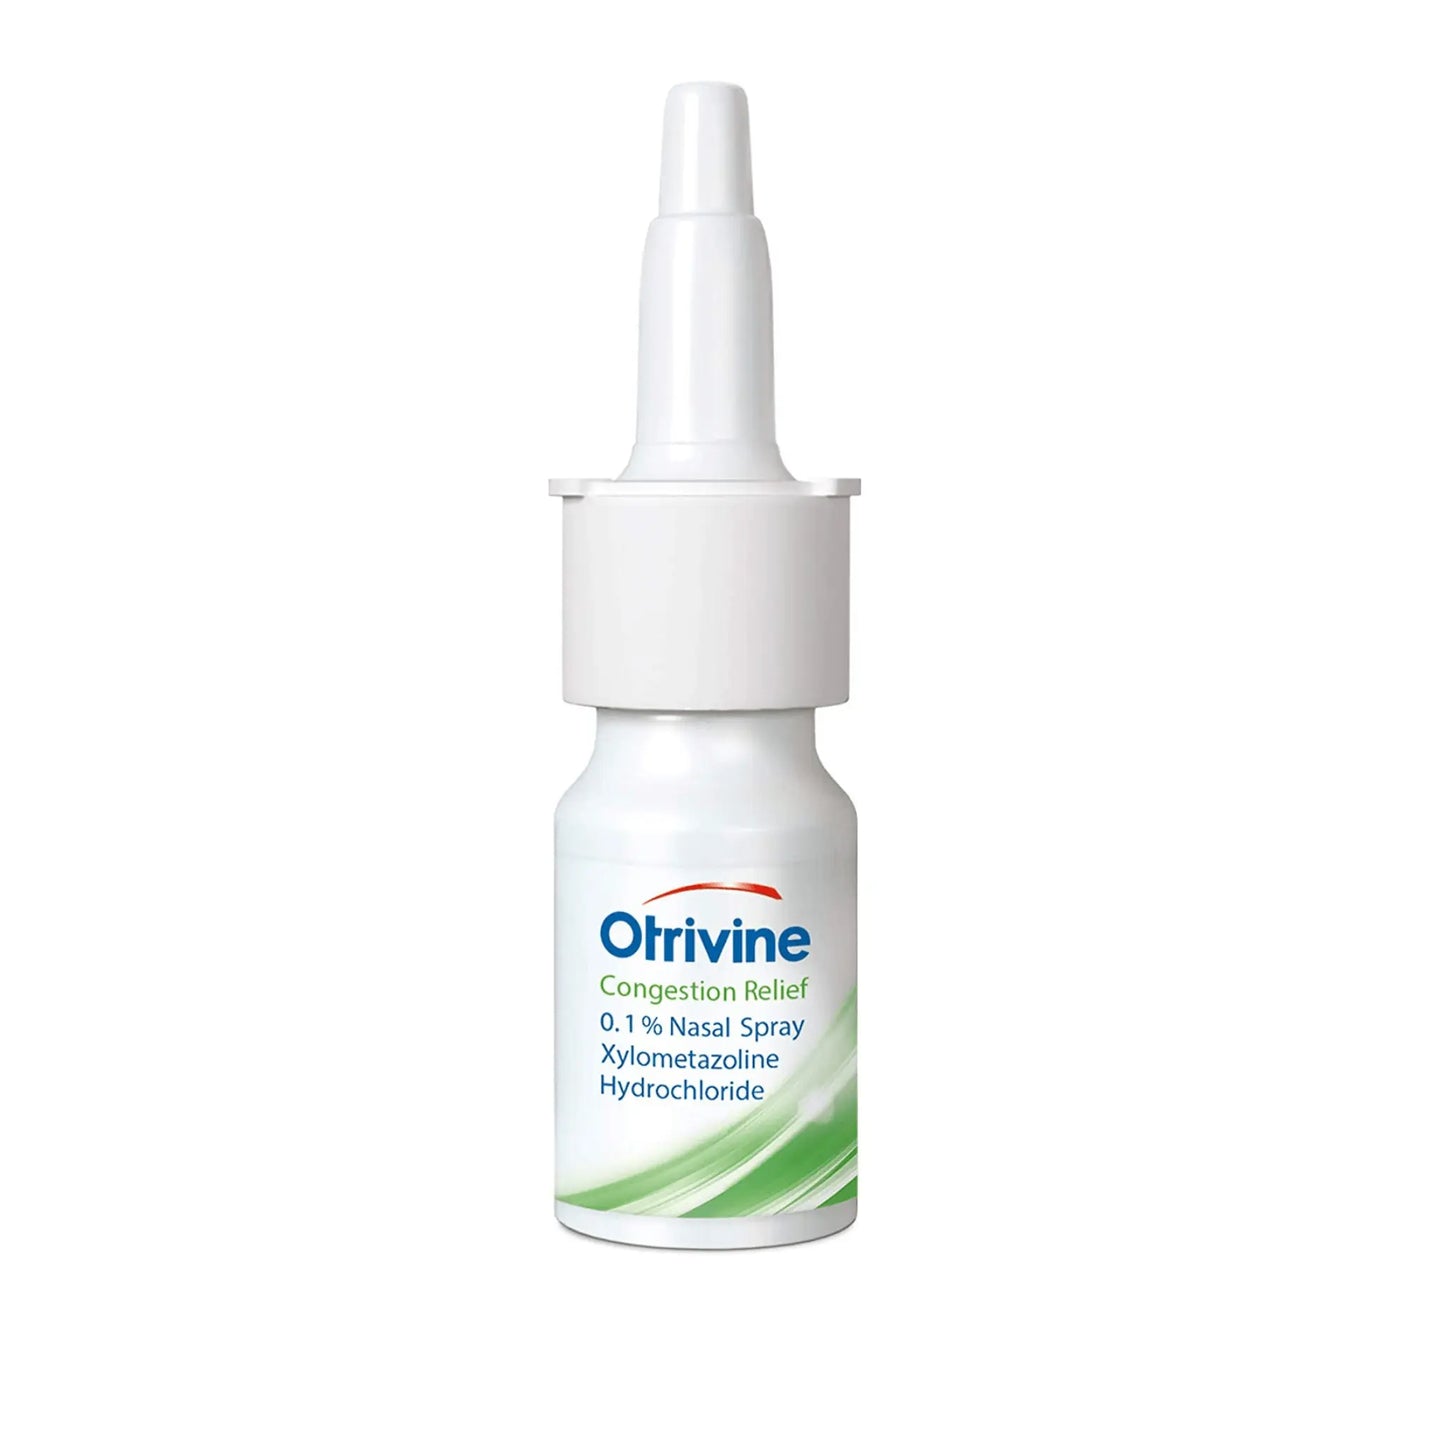 Otrivine Congestion Relief Nasal Spray 10ml